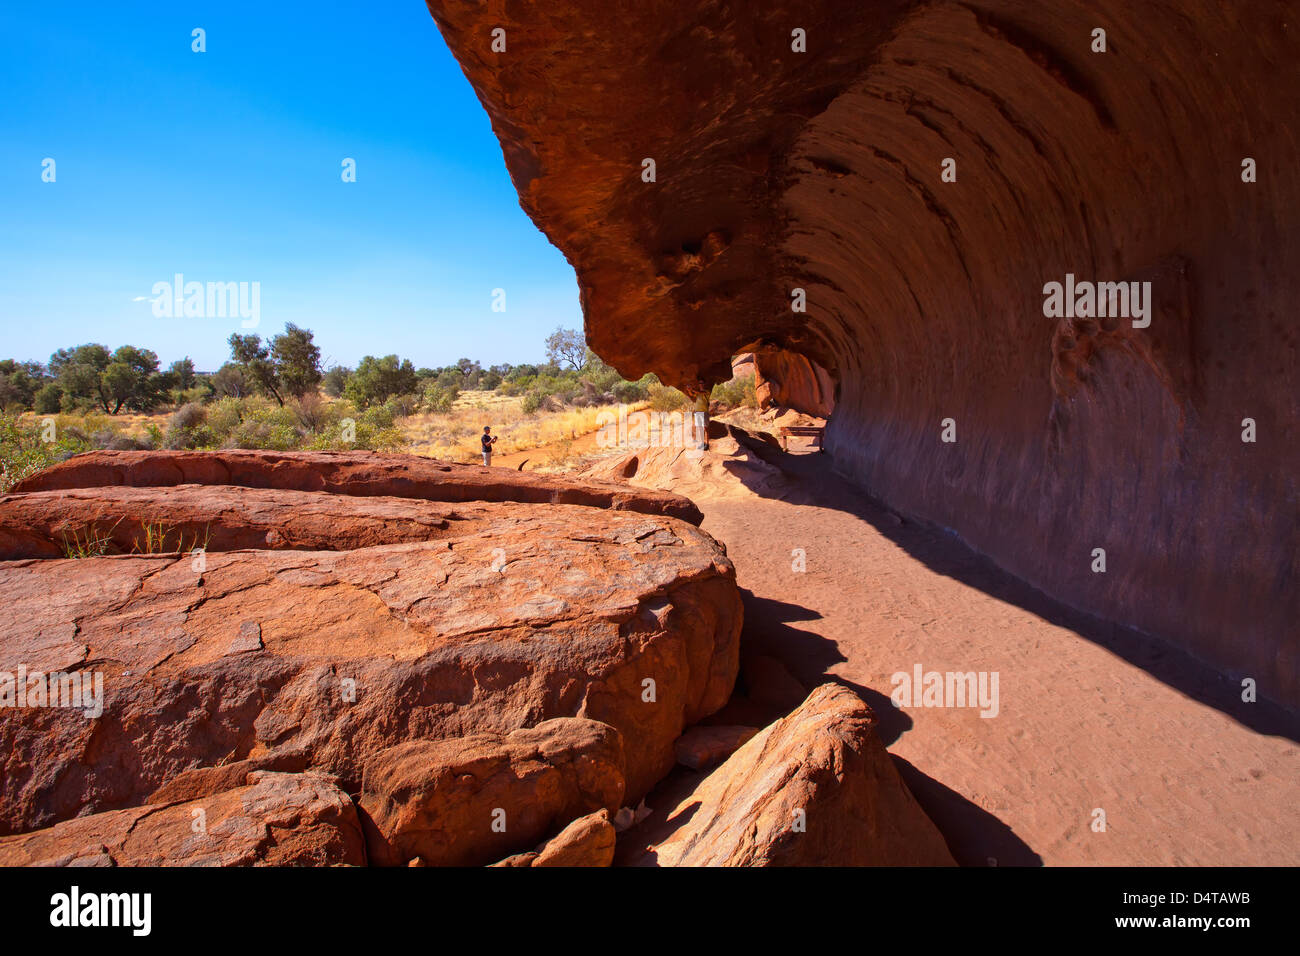 Outback-zentrale Australien Northern Territory Landschaft Landschaften outback Ayers Rock Uluru Stockfoto